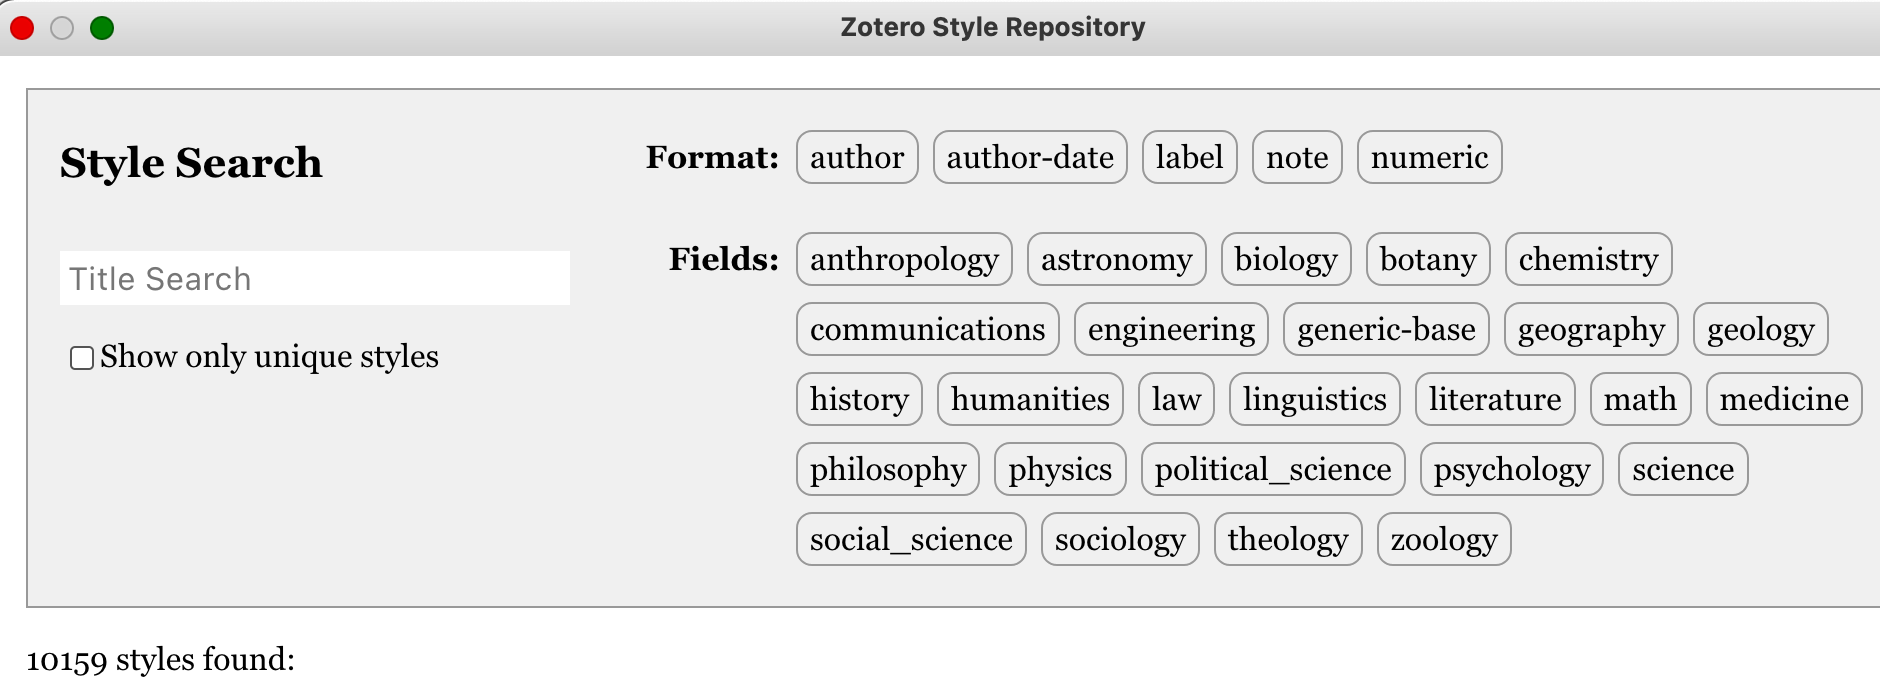 Zotero style repository